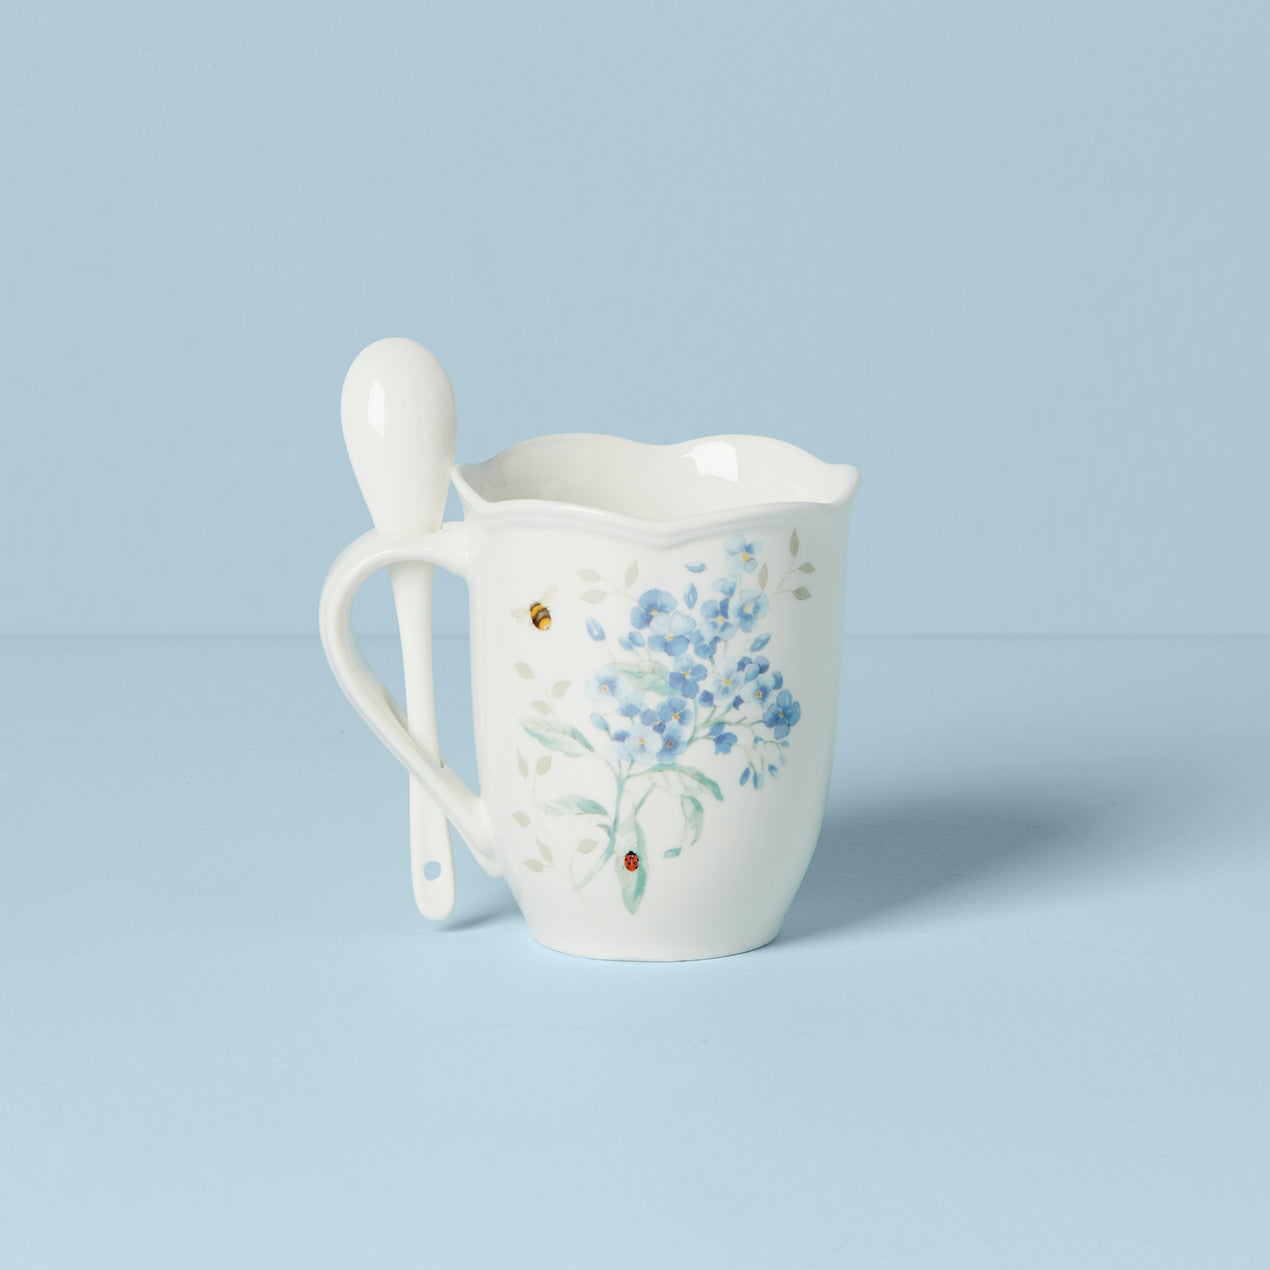 Personalised Name Lilac Floral Travel Mug Coffee Mug Tea Mug Hot Drink Cup  